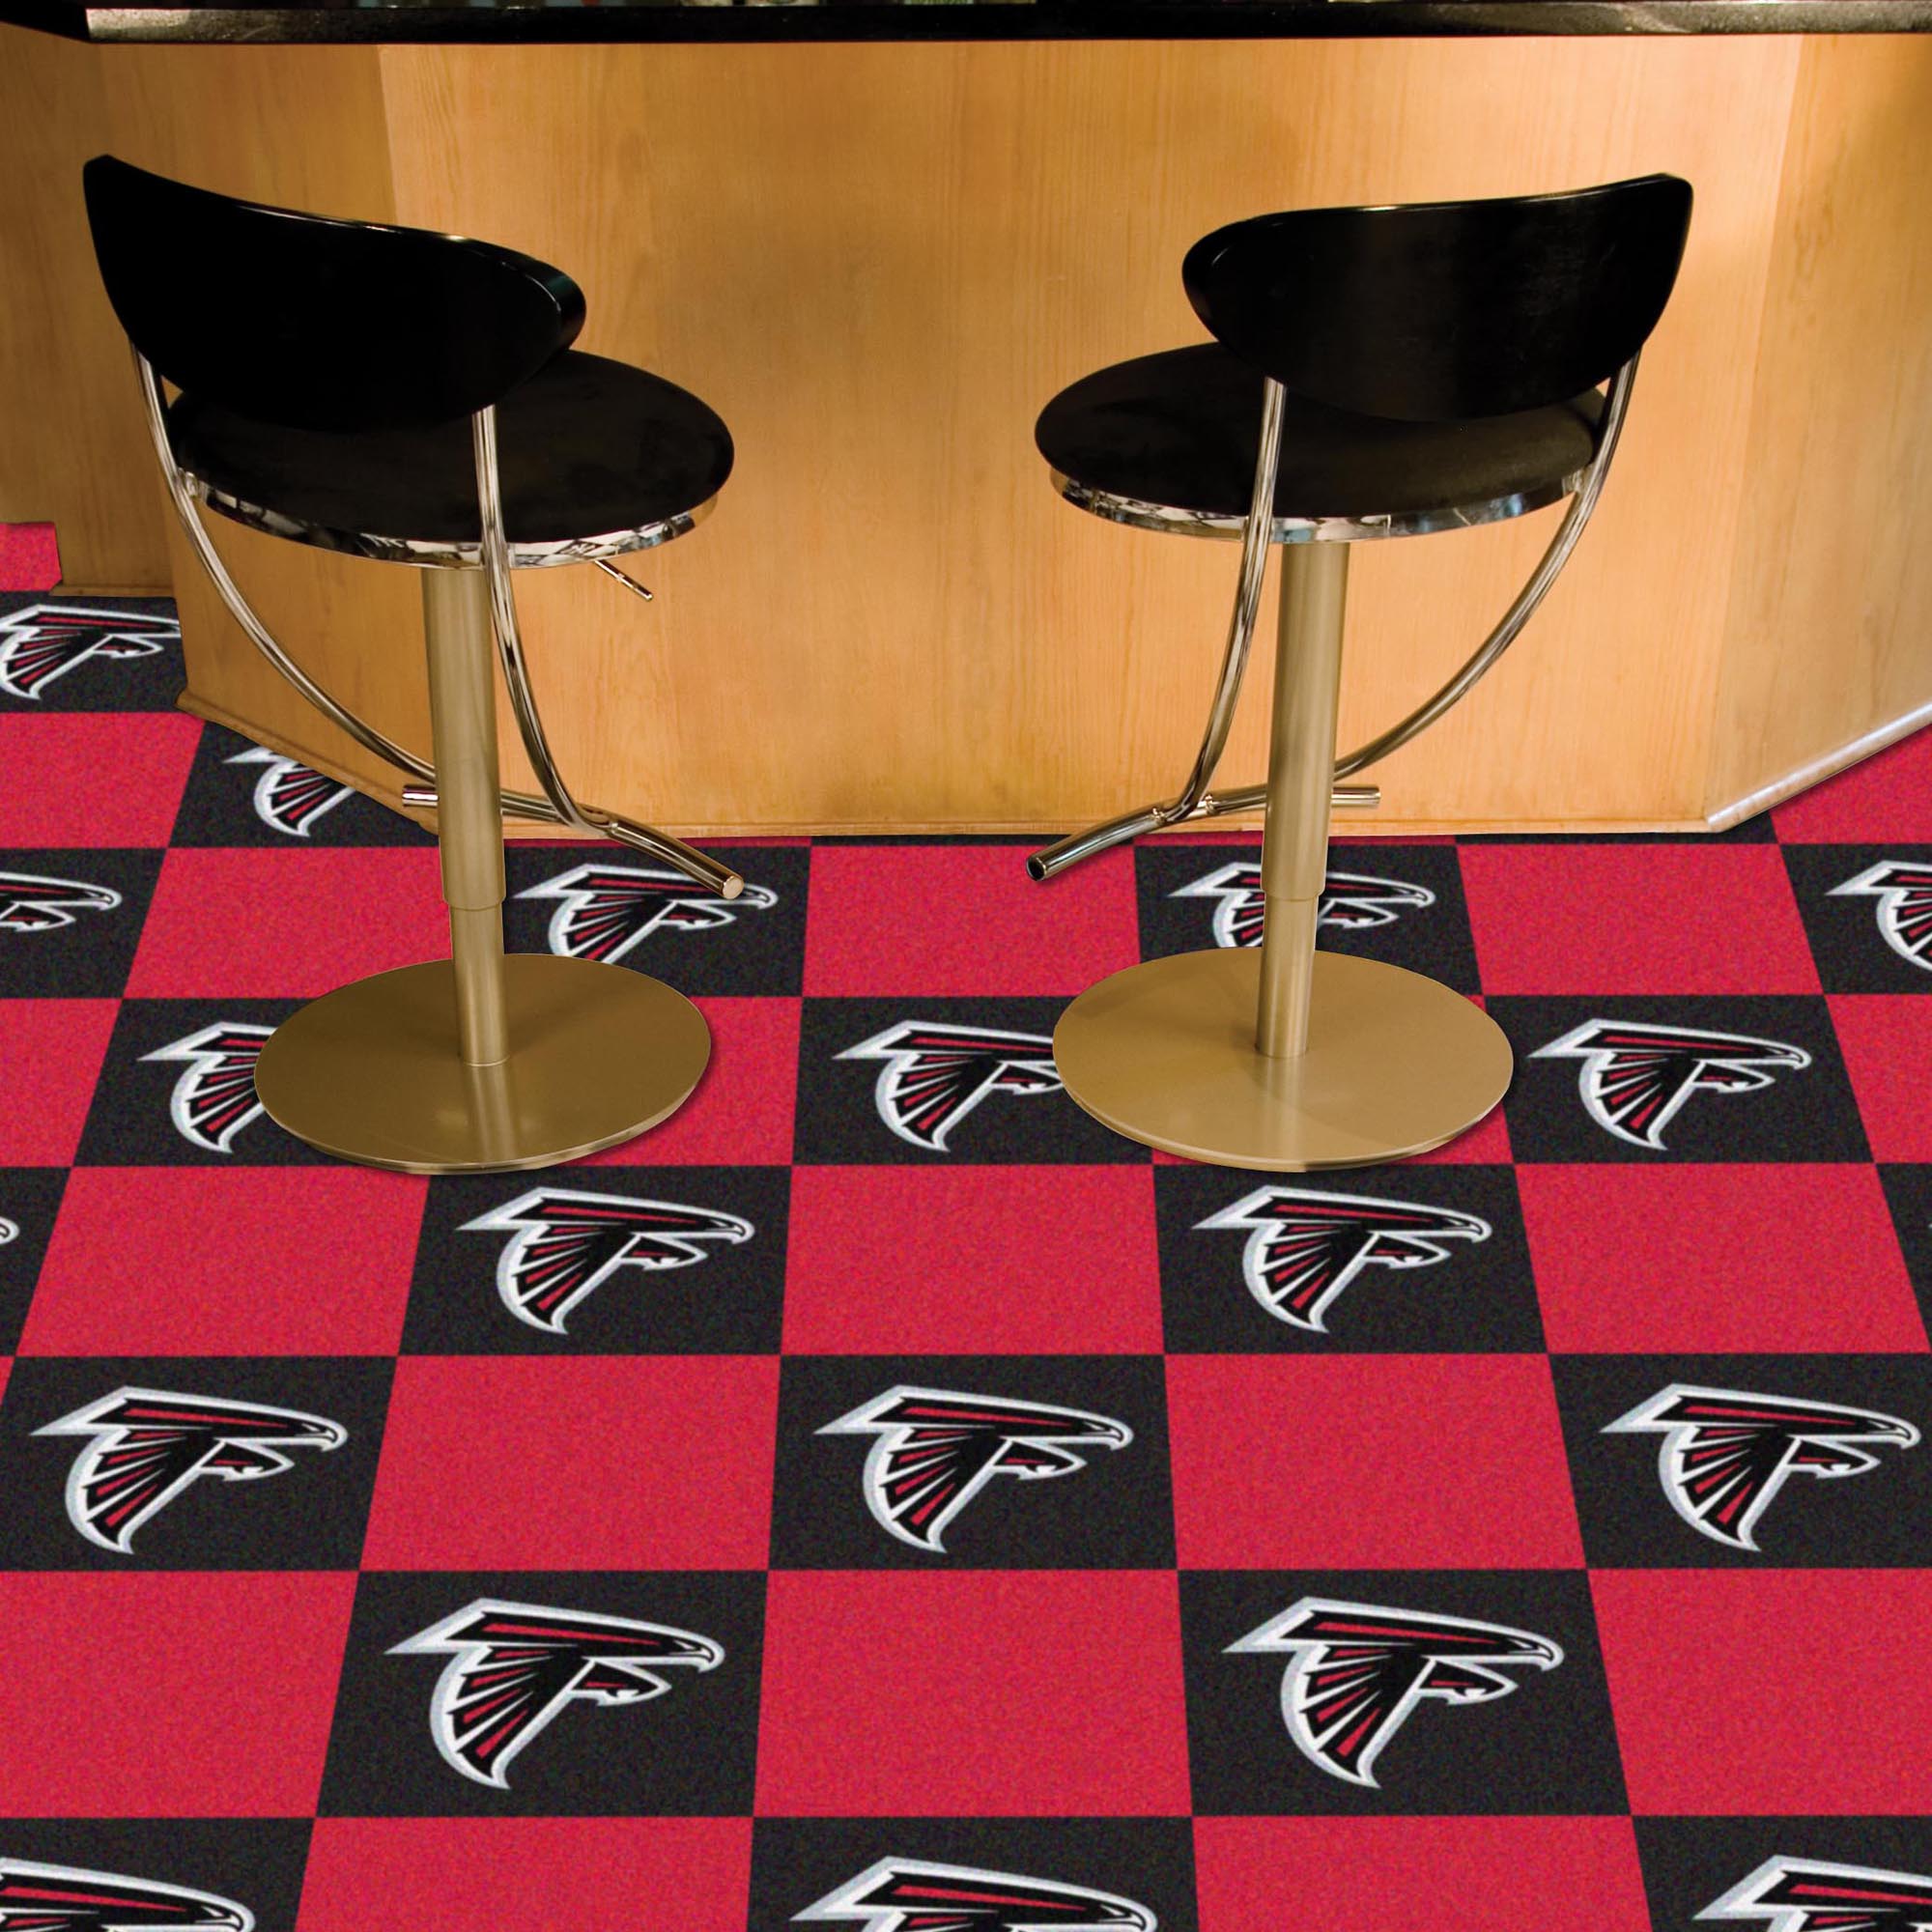 Atlanta Falcons Team Carpet Tiles - 45 sq ft